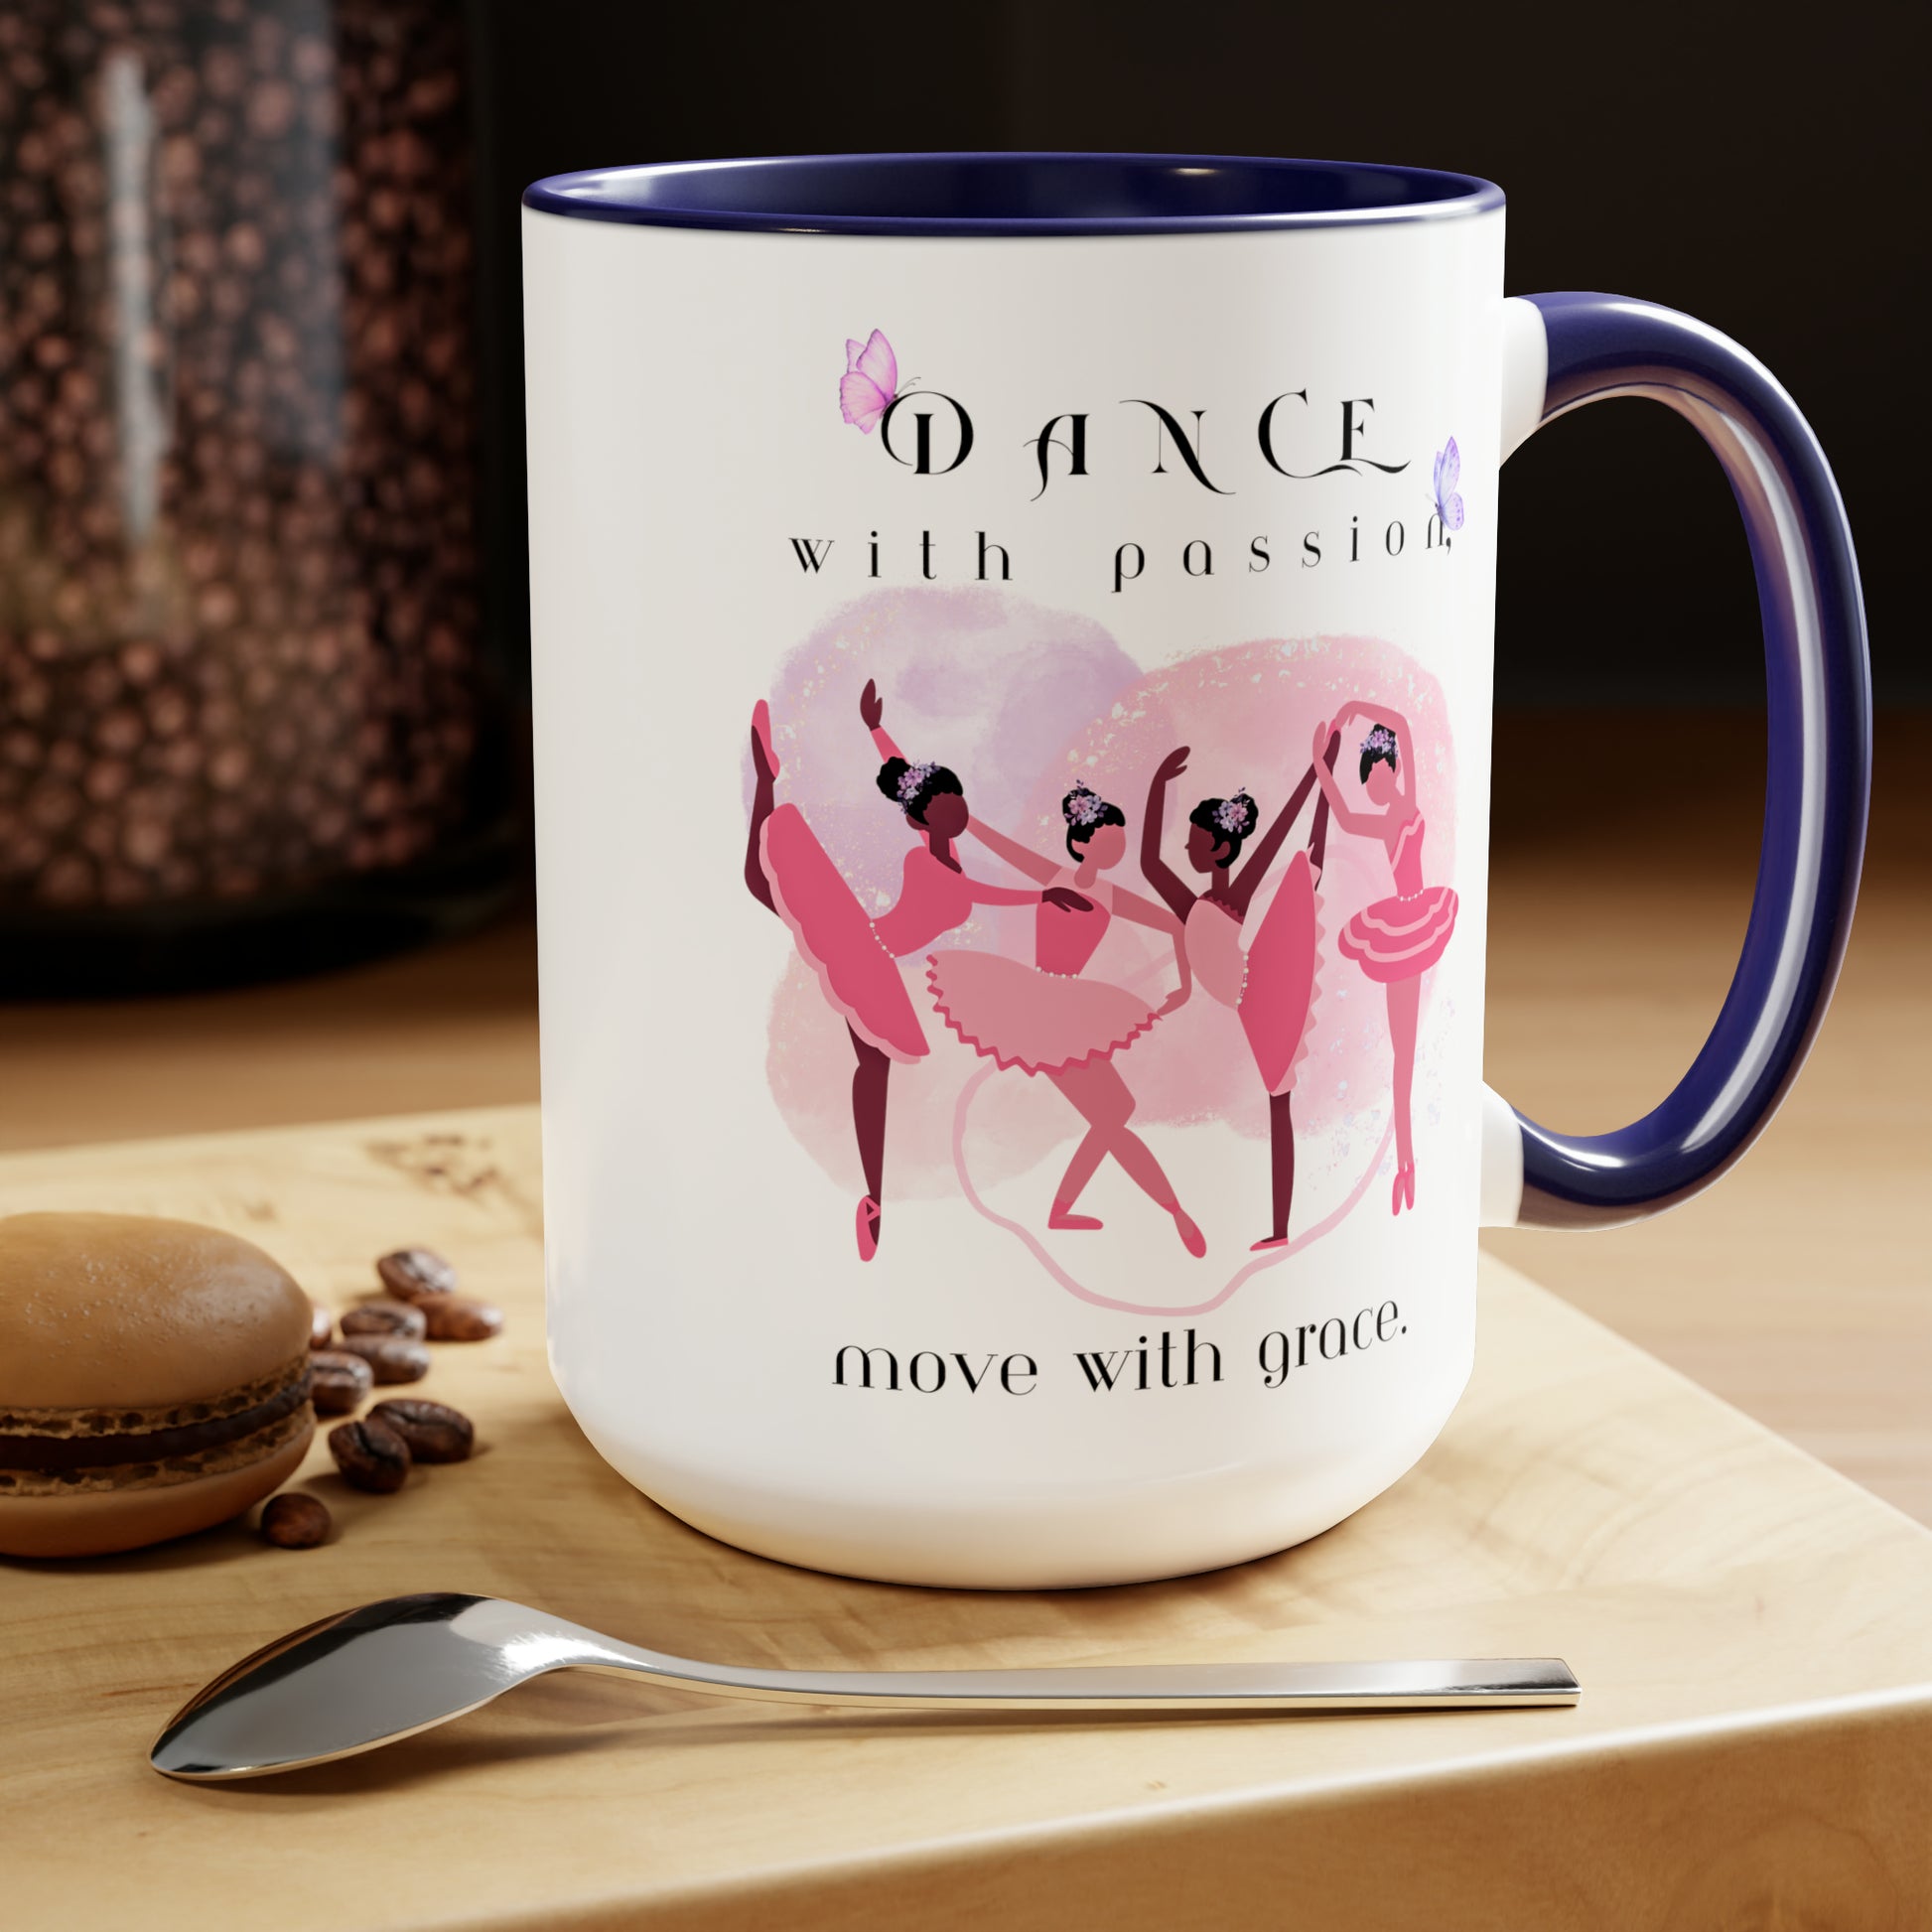 Two-Tone Coffee Mugs, 15oz - Dance with passion Ballerina - royal blue rim